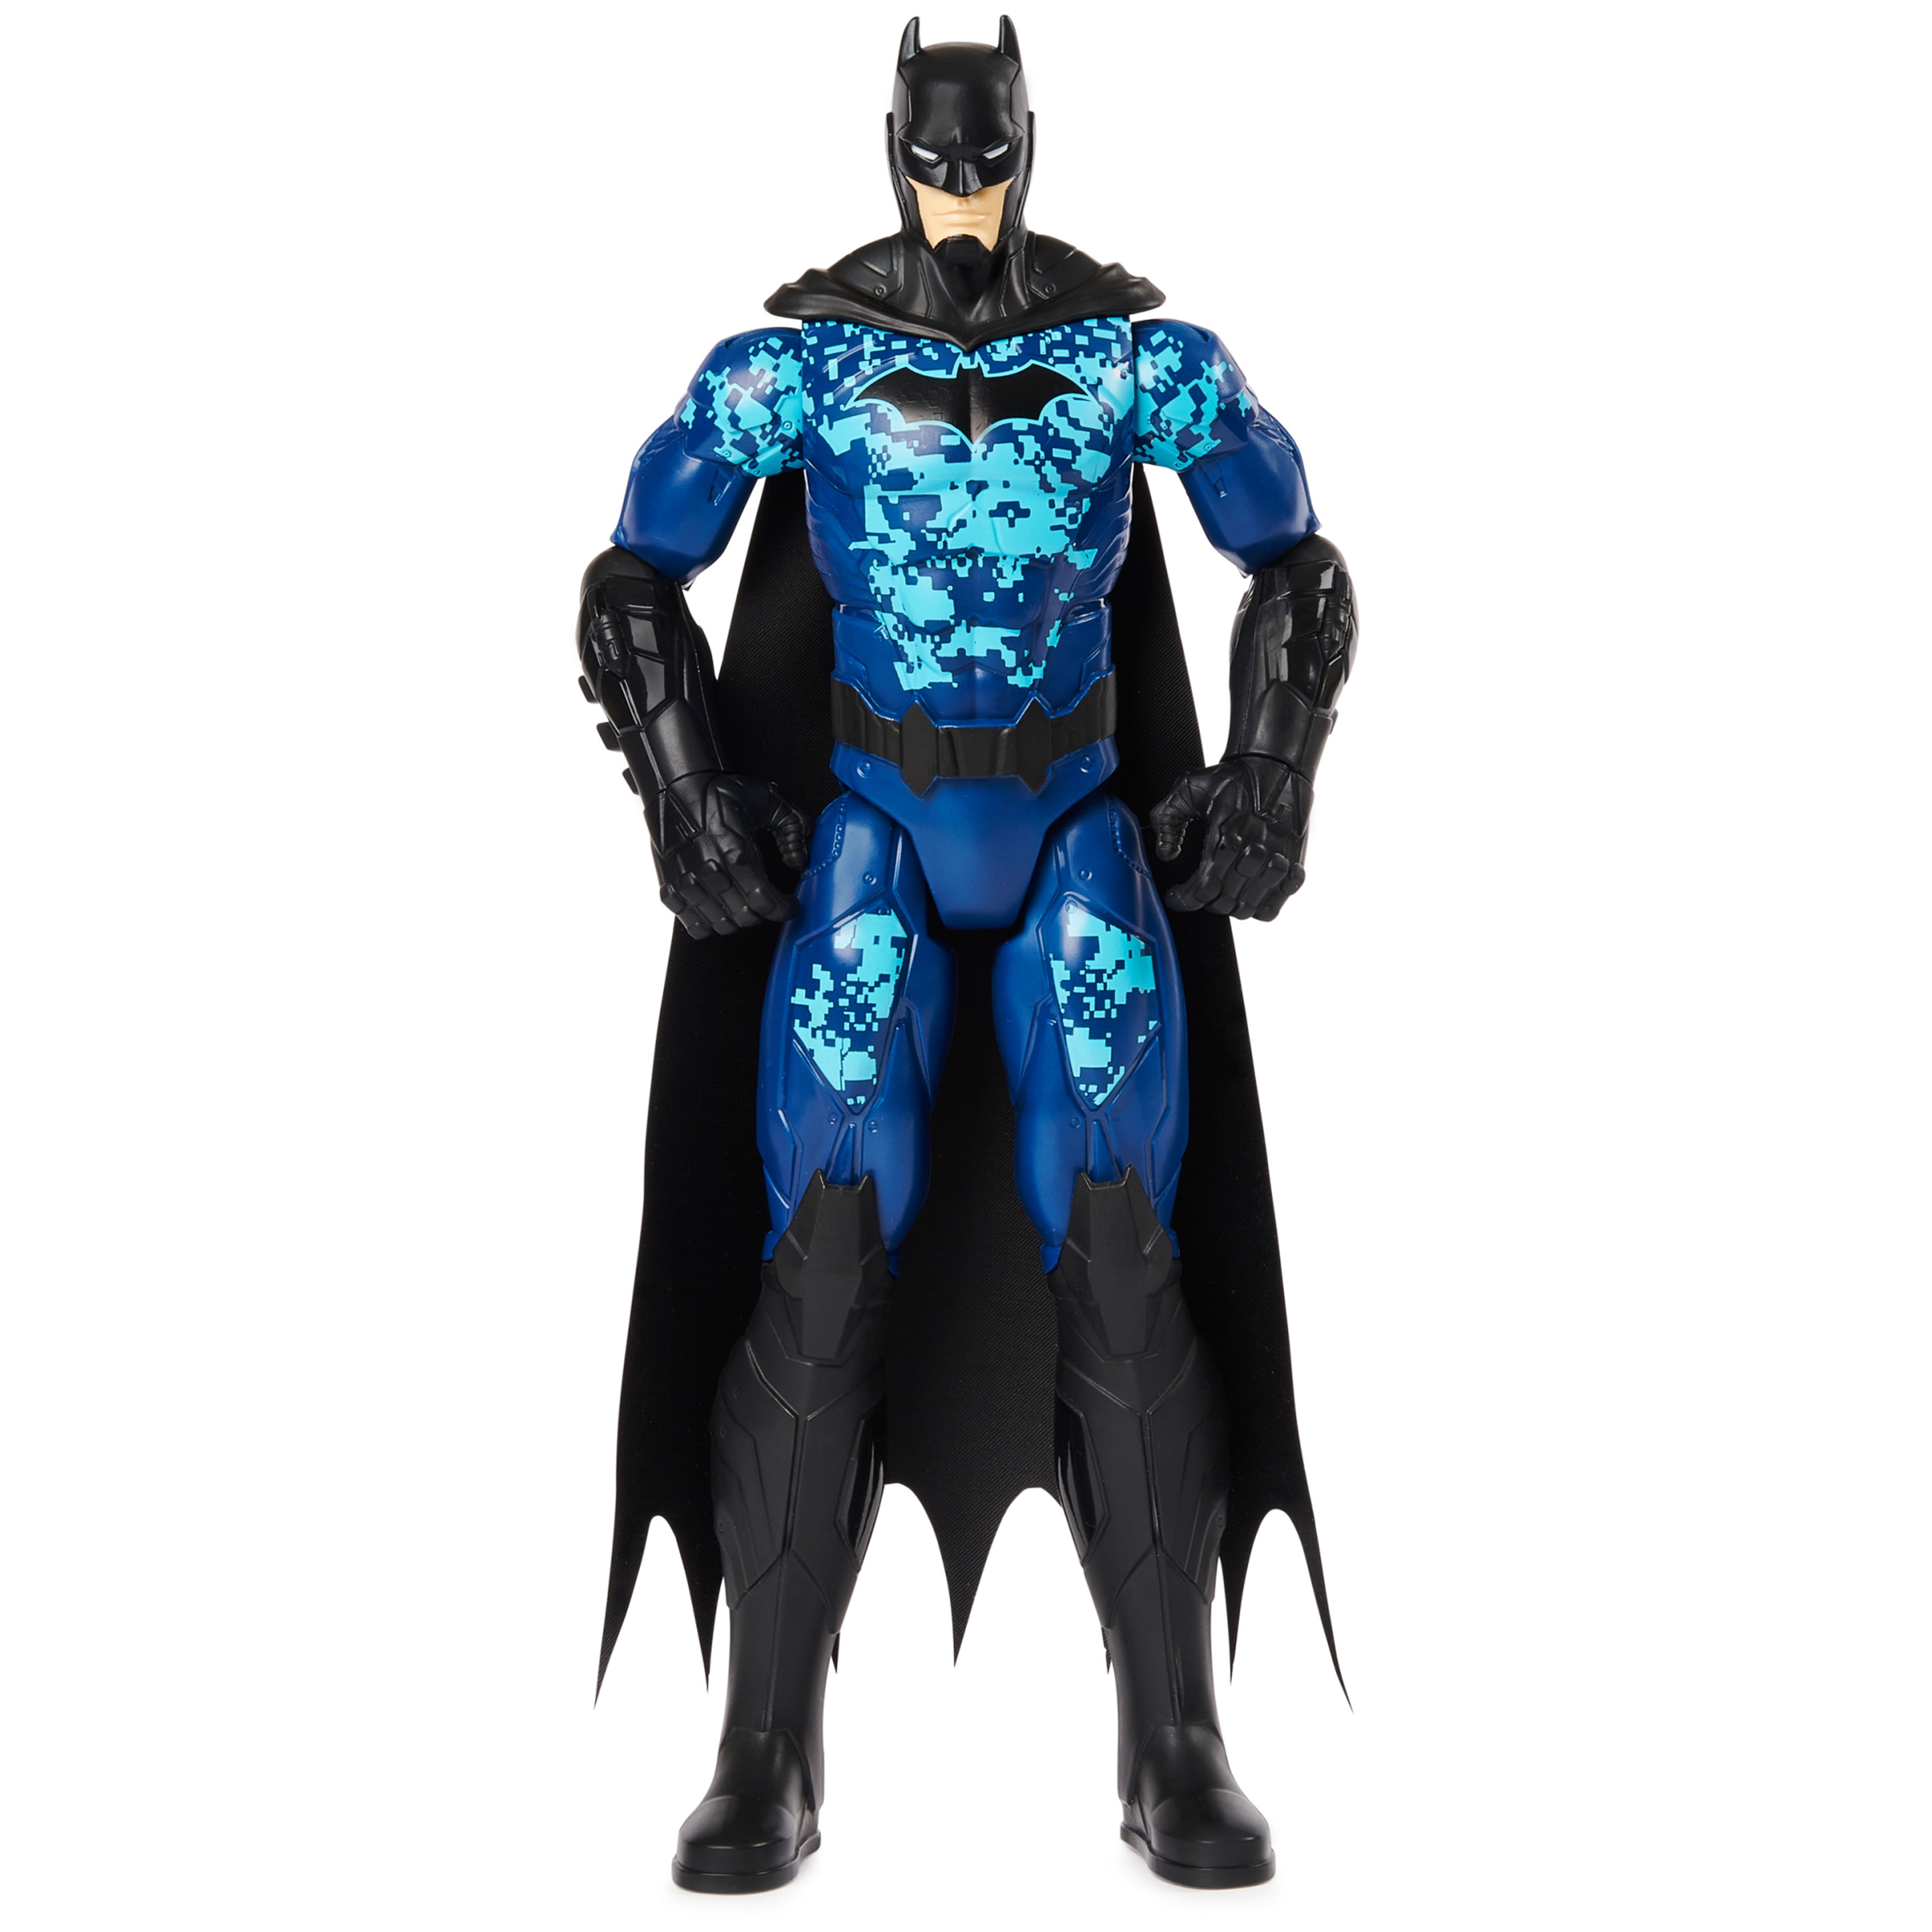 Batman Action Figure Superhero Movie Statue Kids Toys Gift Dc Comics Collectible 